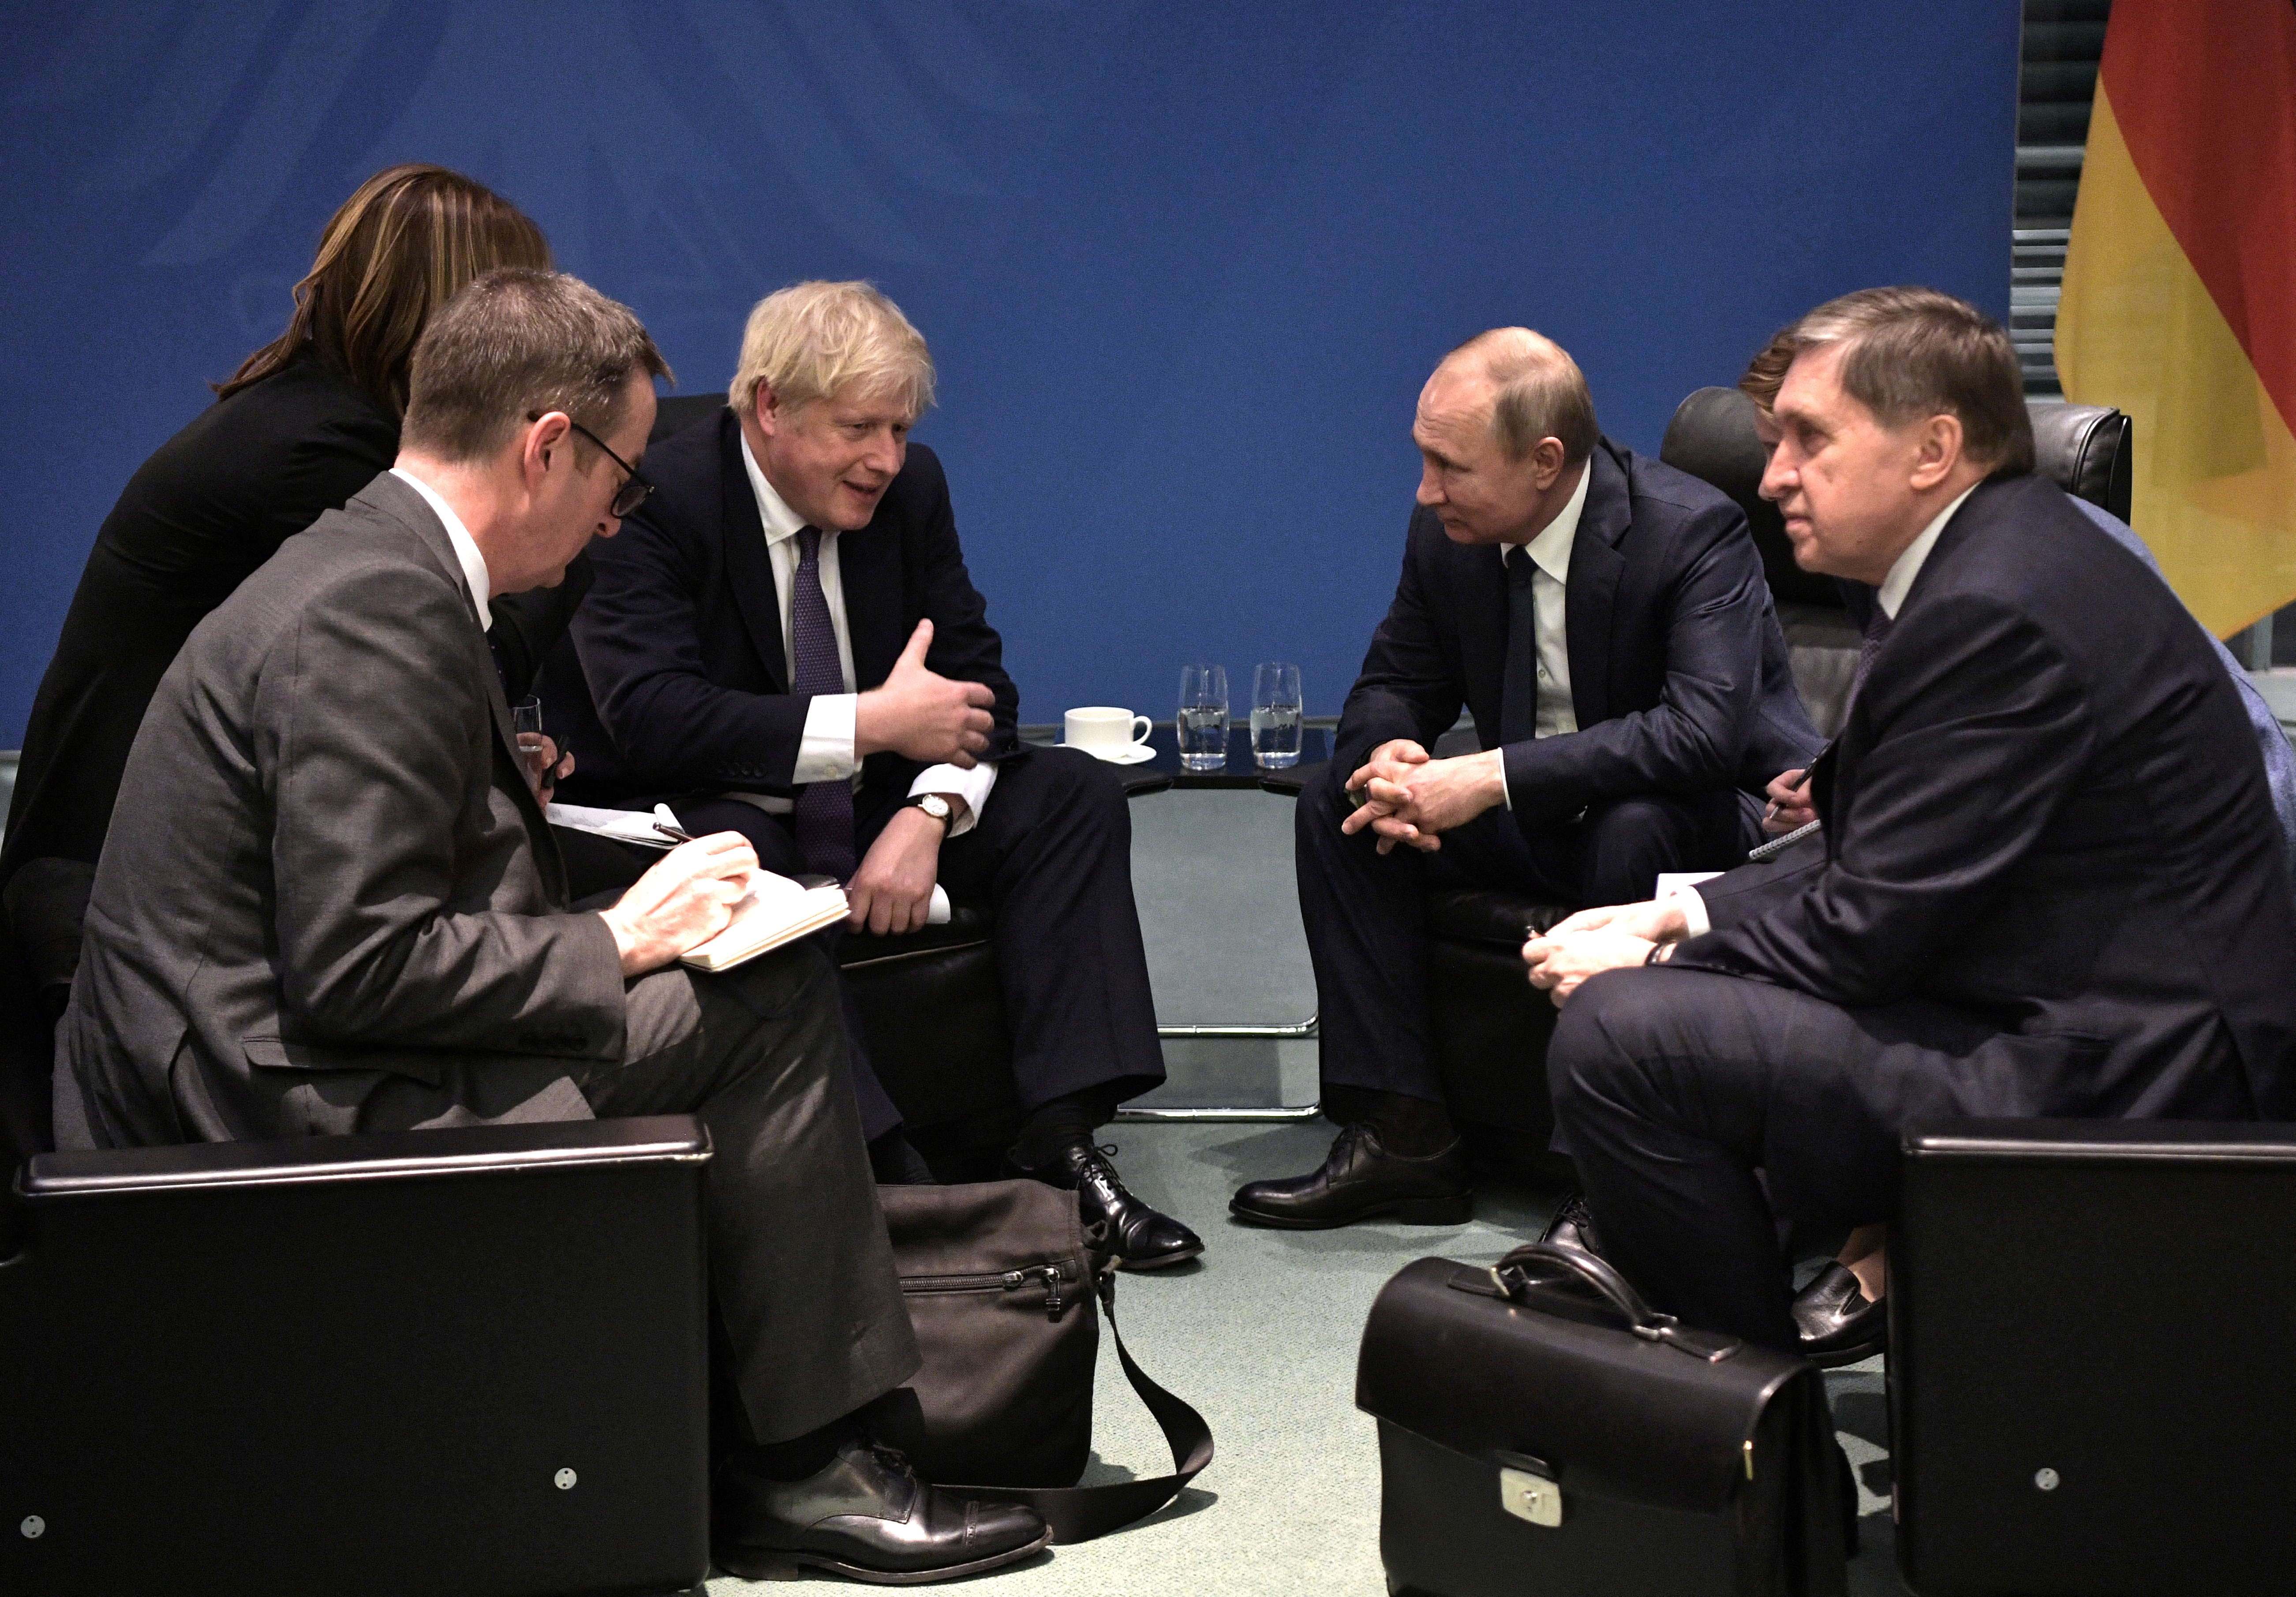 Russia's President Vladimir Putin and Britain's Prime Minister Boris Johnson meet on sideline of the Libya summit in Berlin